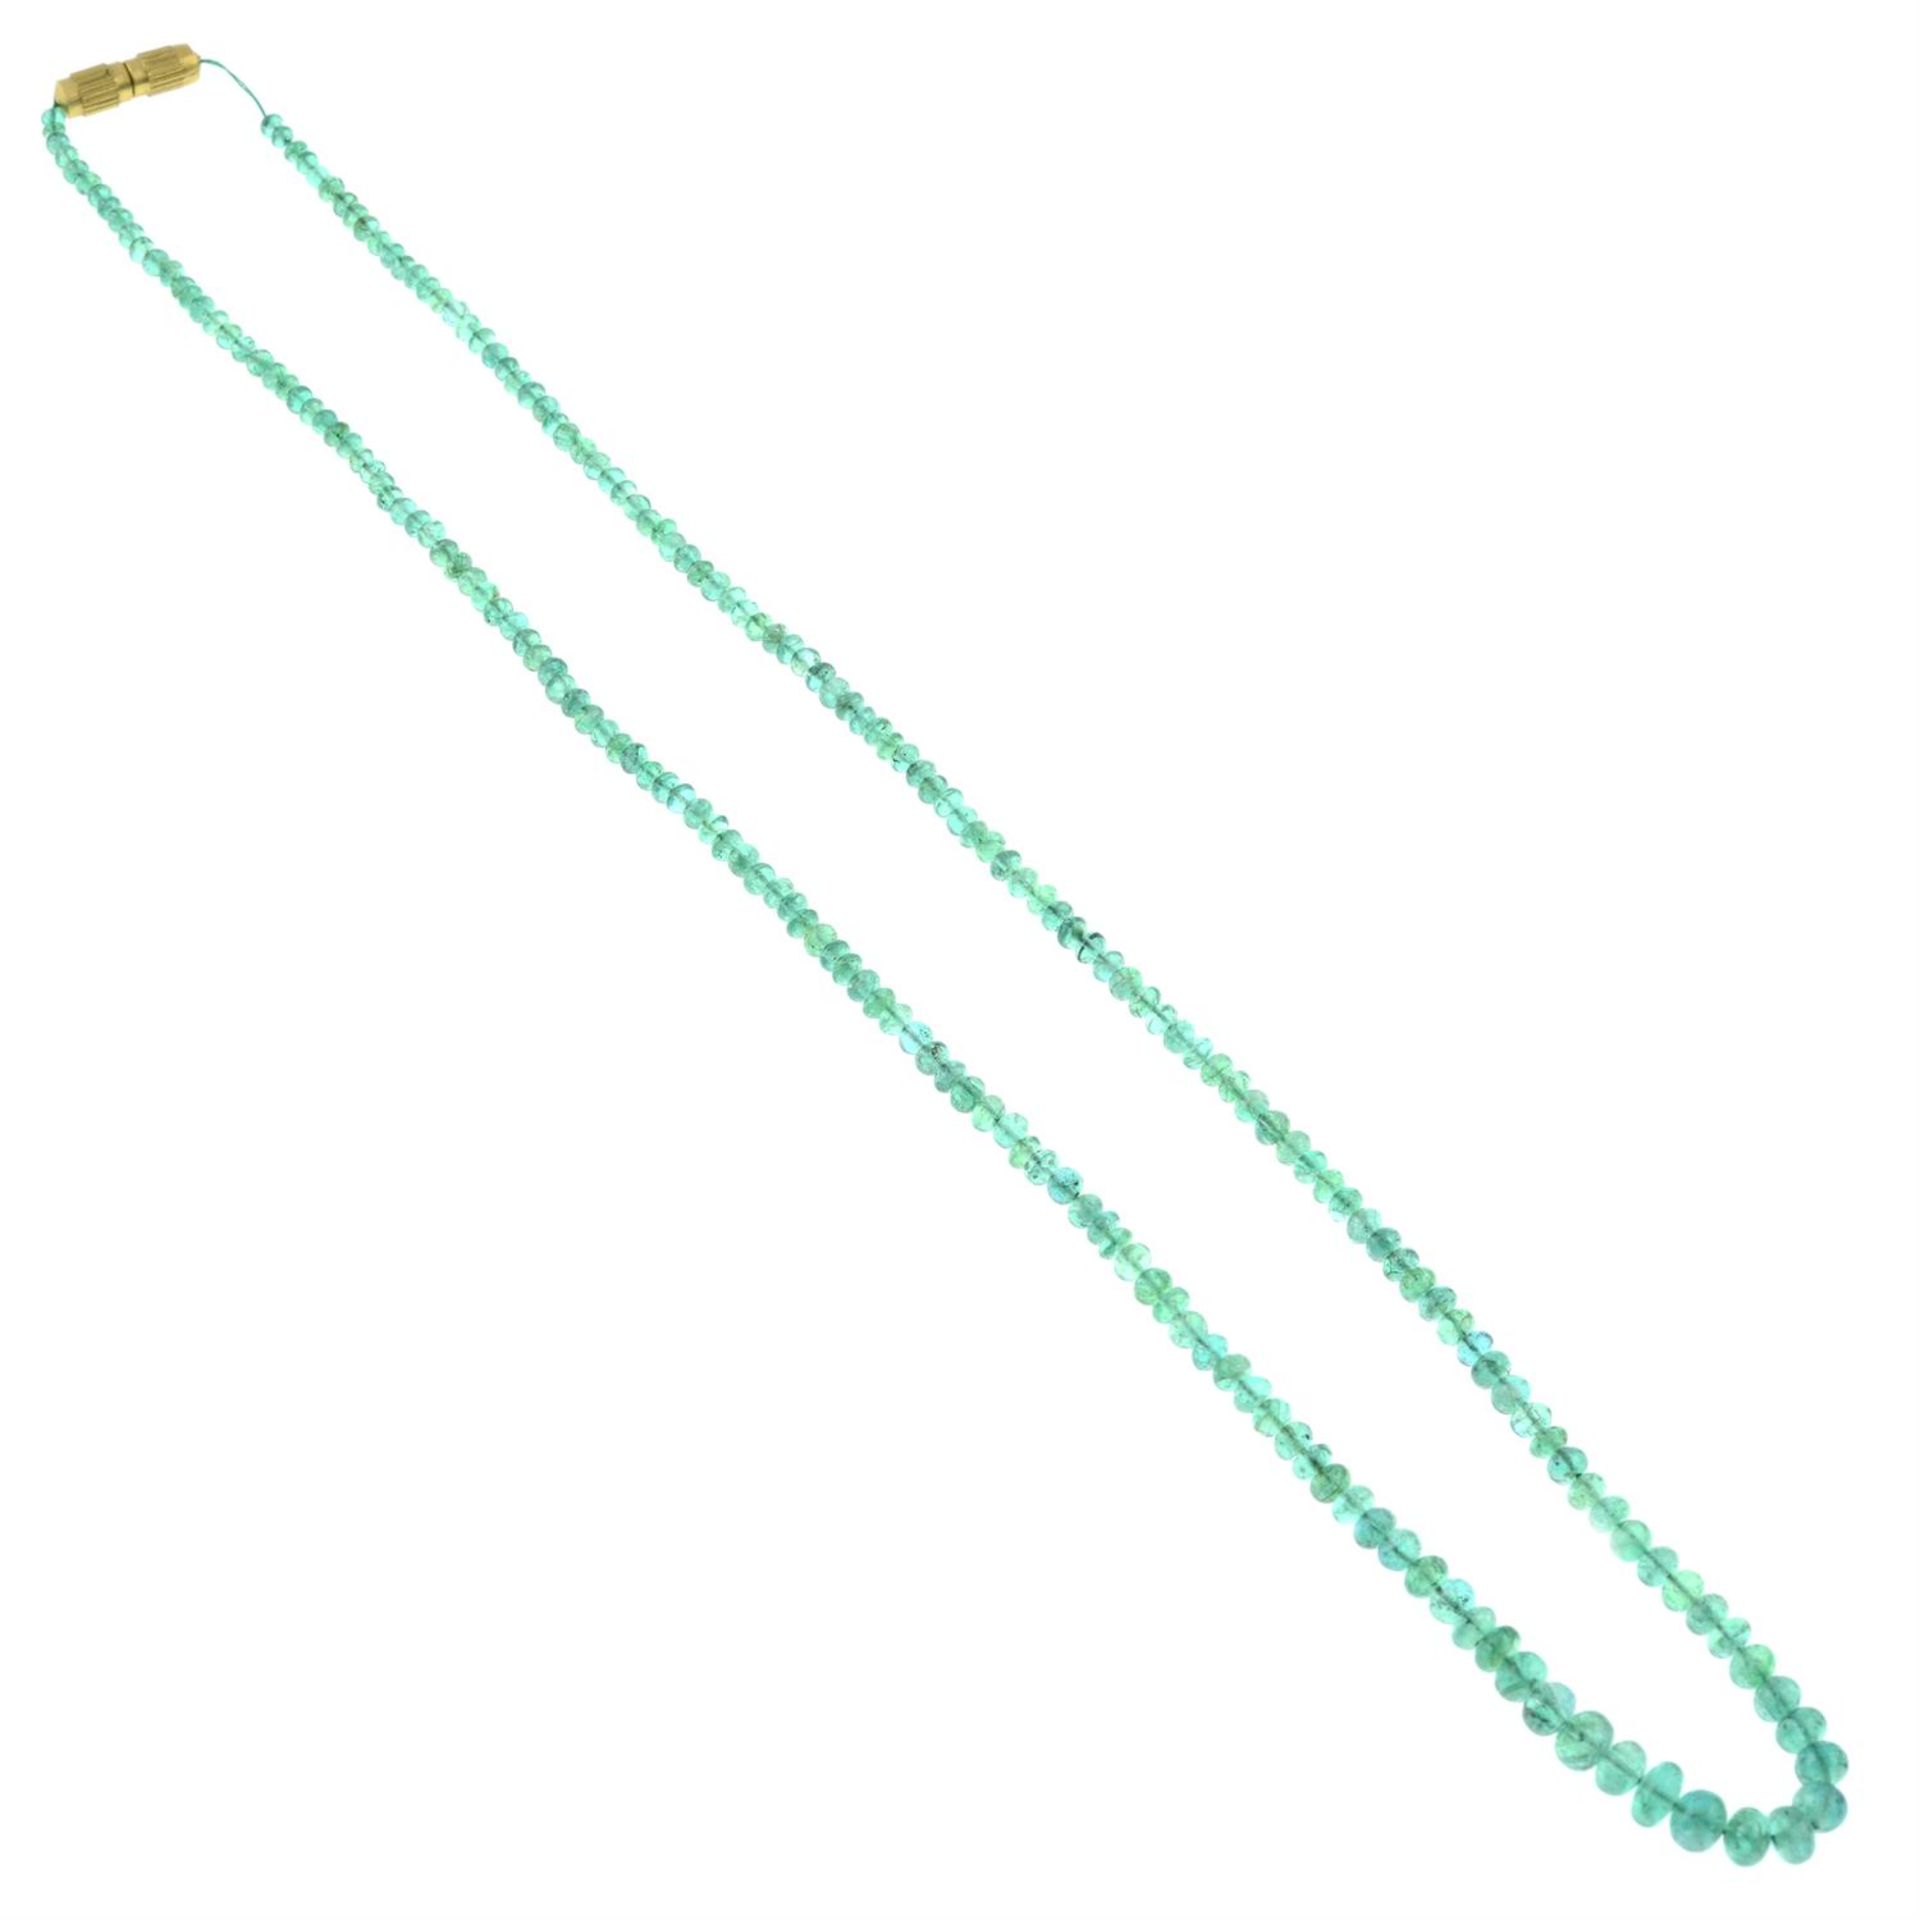 A graduated emerald bead necklace.